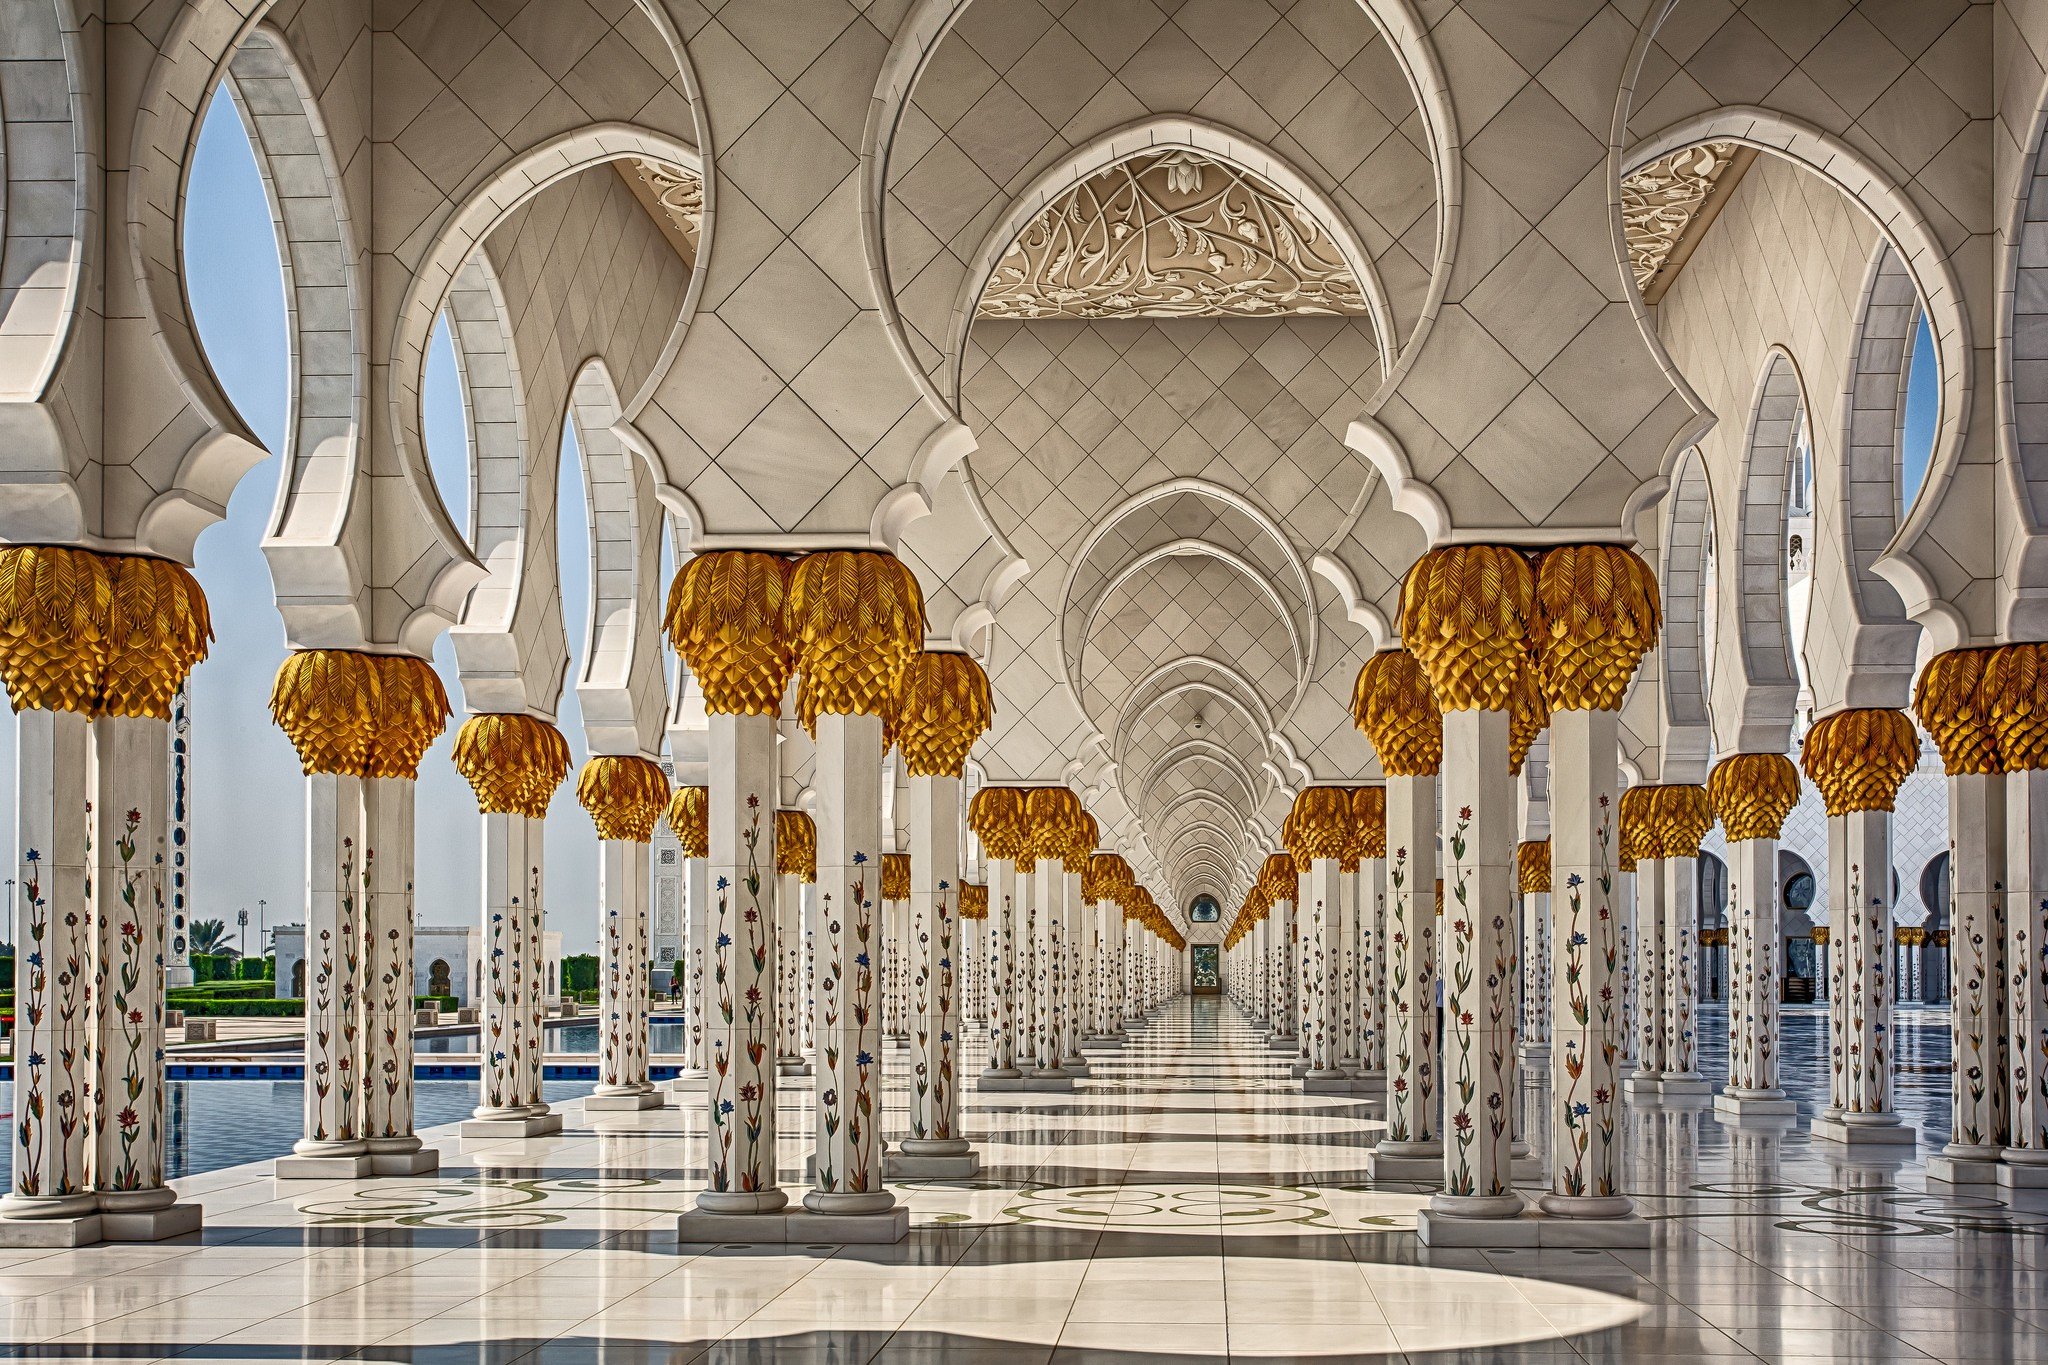 174985 Architecture Interiors Abu Dhabi Mosques United Arab Emirates Pillar Arch Symmetry Sunlight Tiles Shadow 